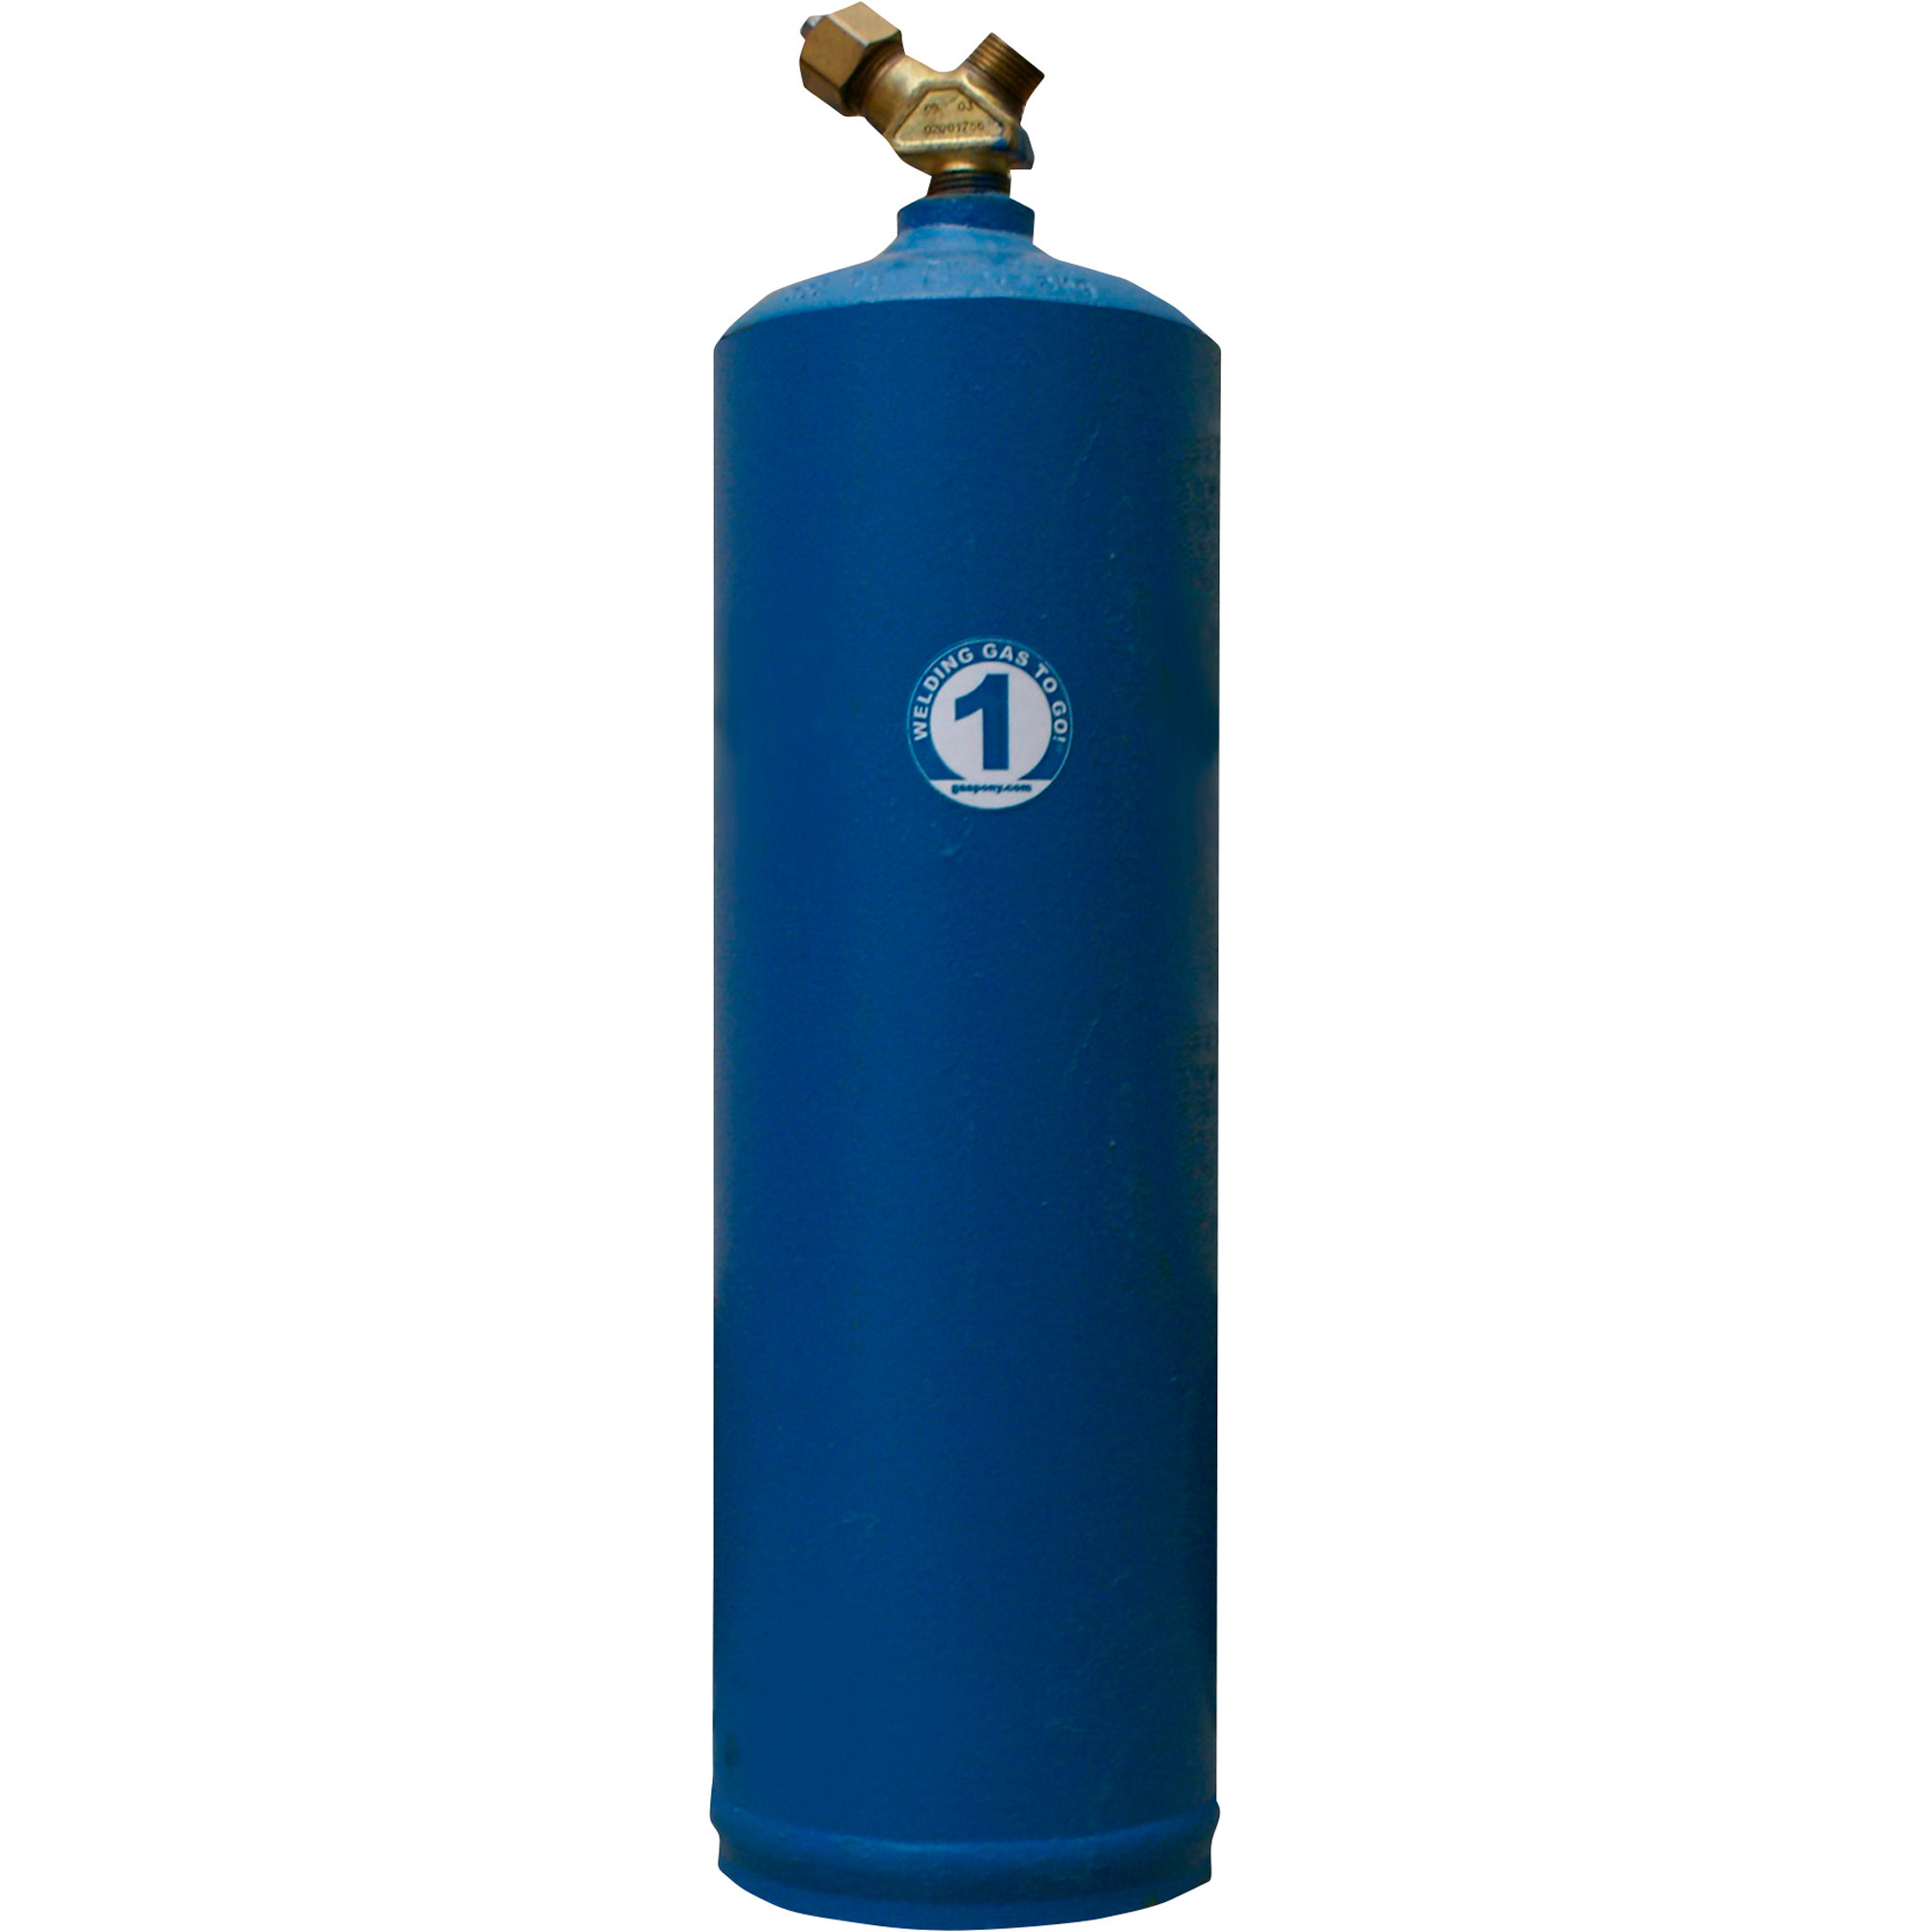 Thoroughbred Acetylene Gas Cylinder â Size #1, 10CF